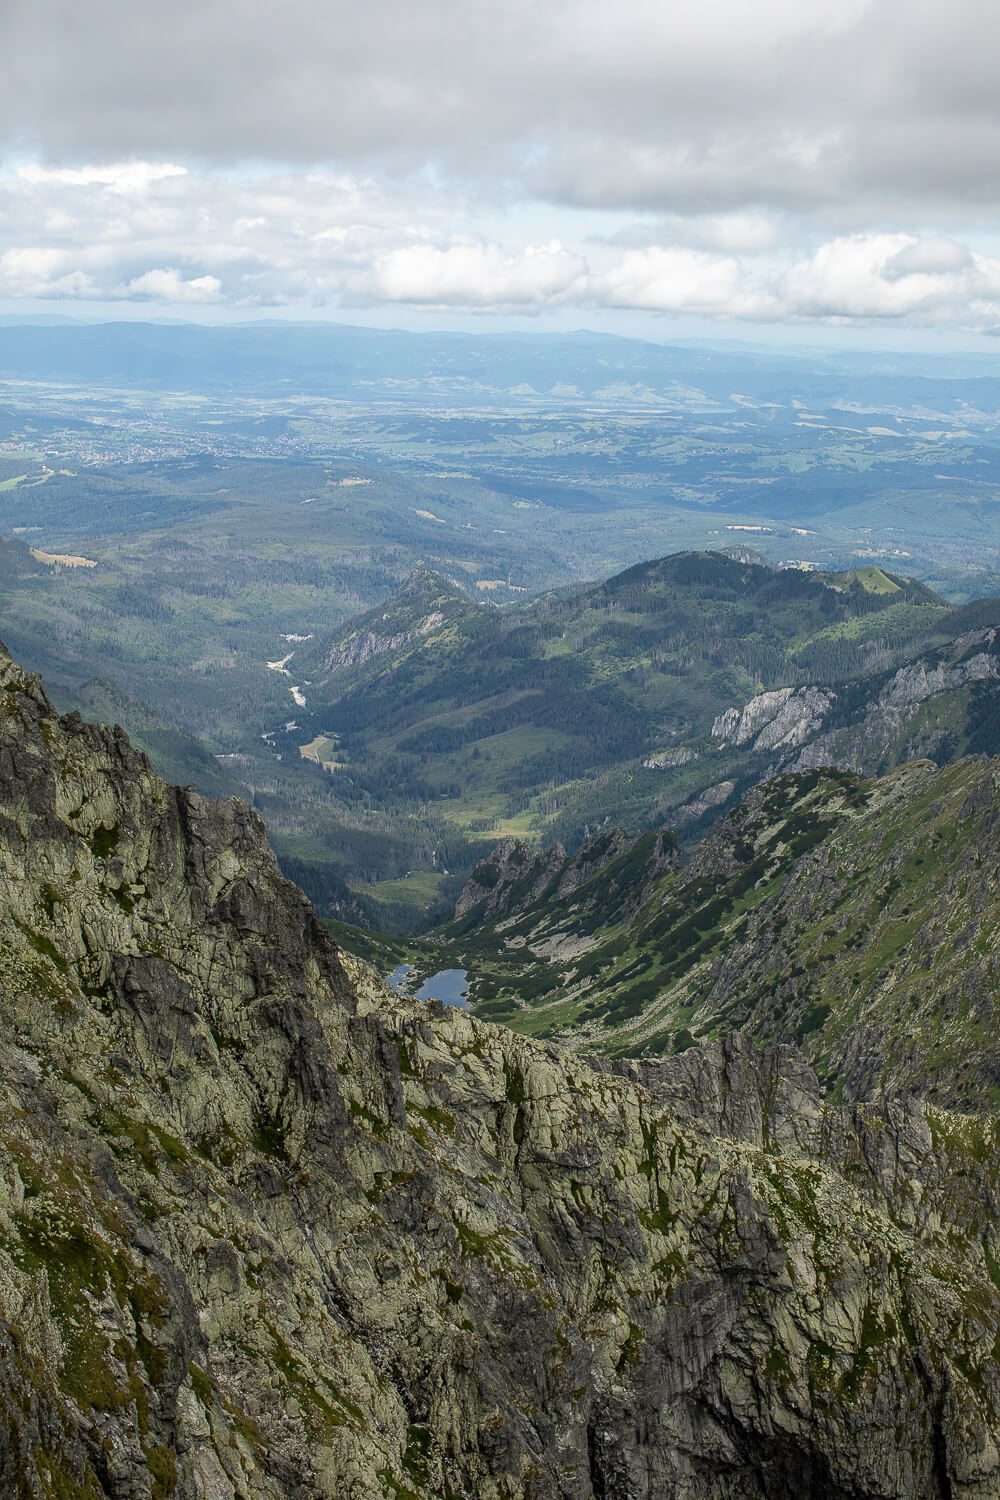 Views from Rysy Peak